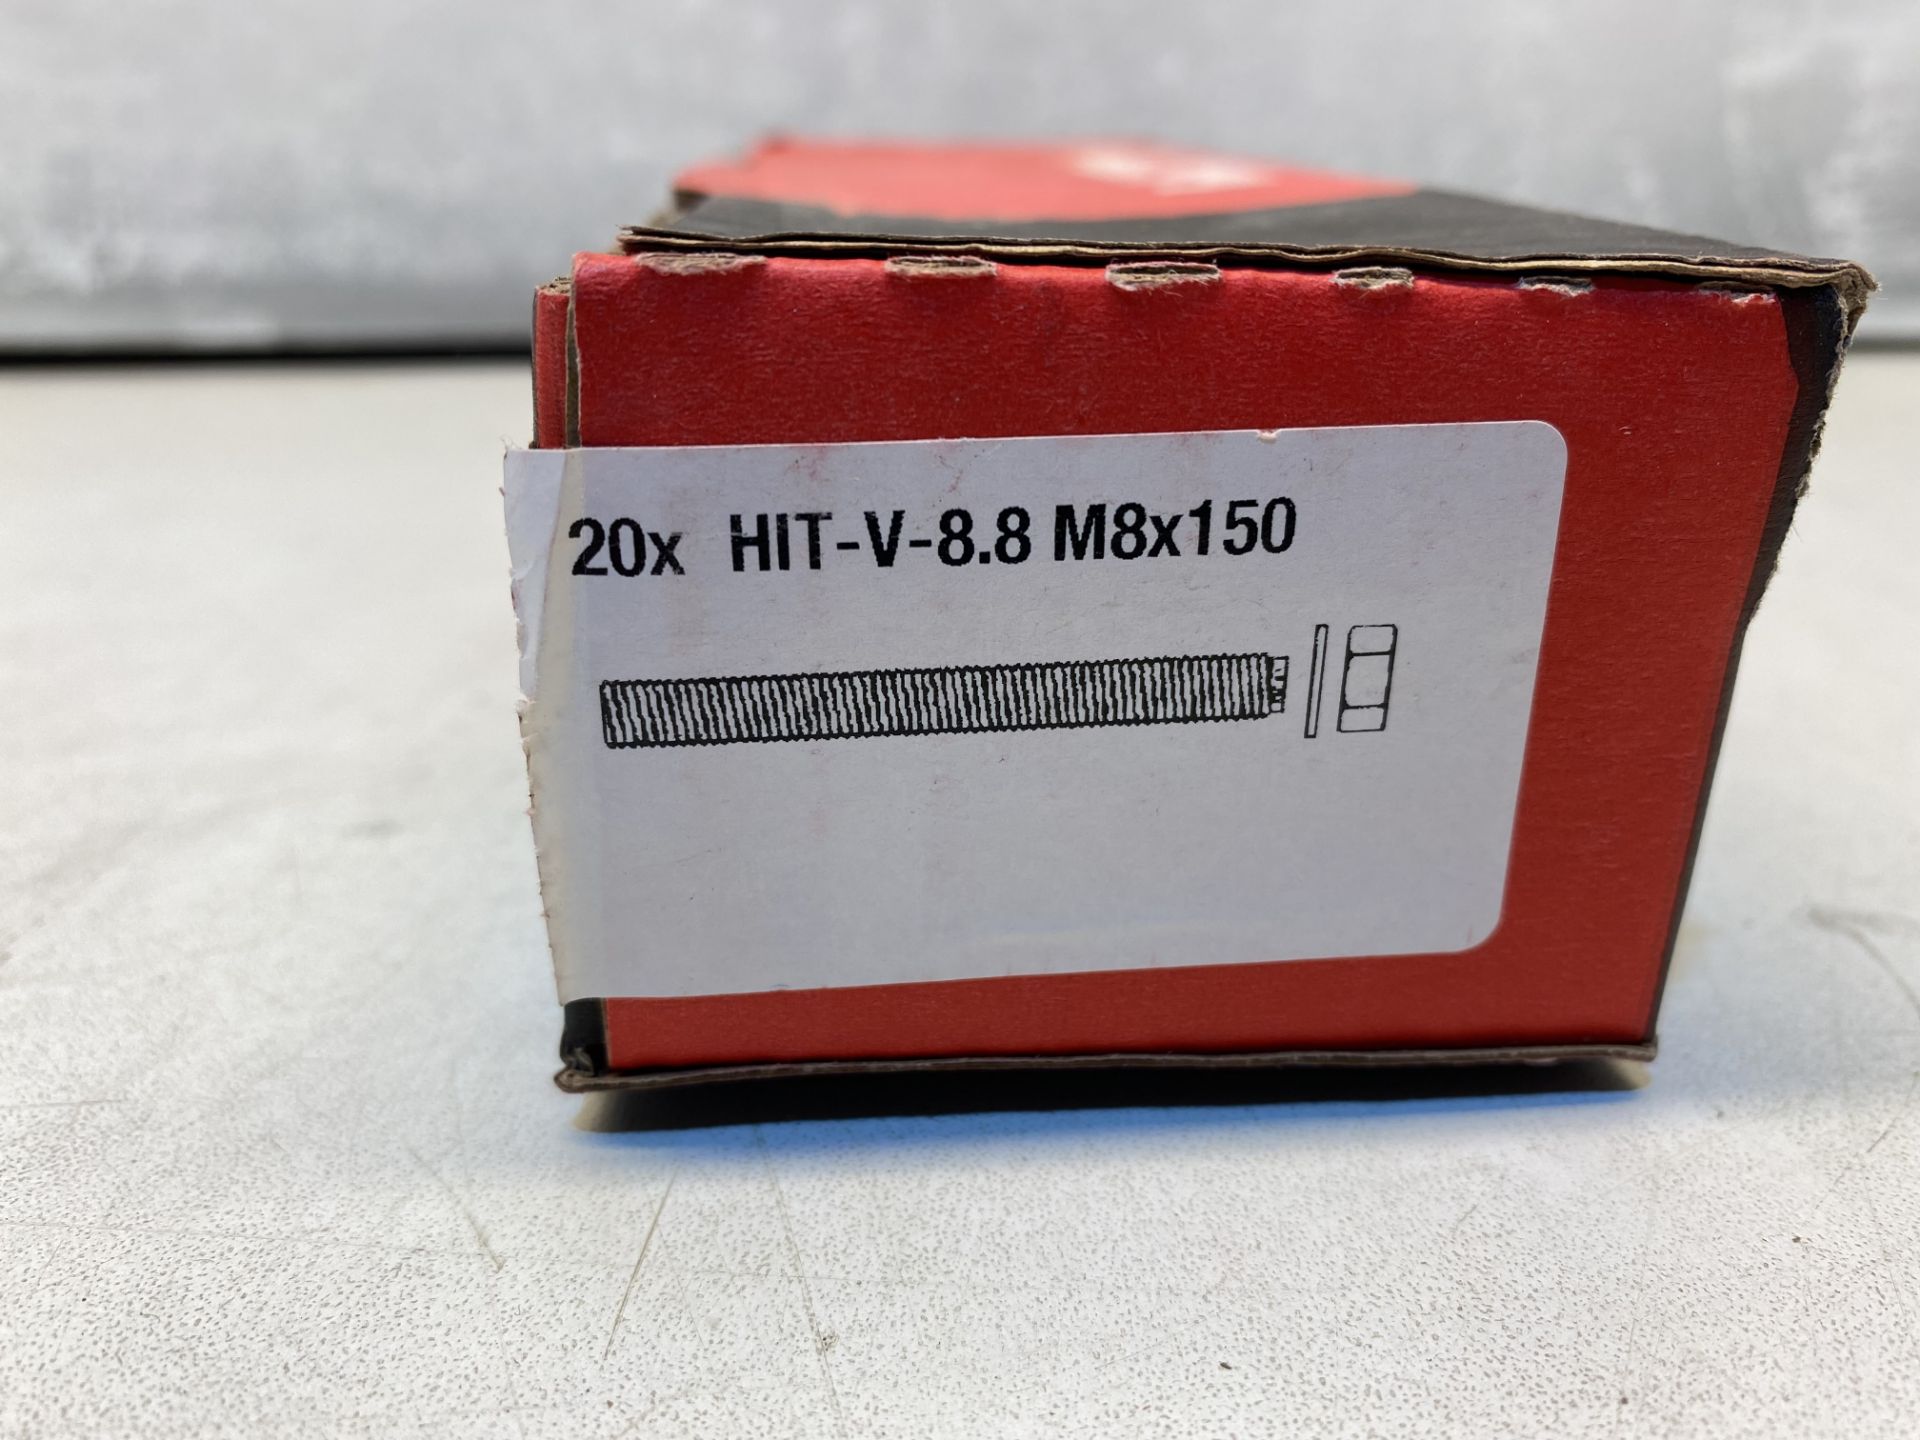 11 x Boxes Of Hilti M8 x 150 HIT-V-8.8 ANCHOR ROD | 20 per box - Image 2 of 4